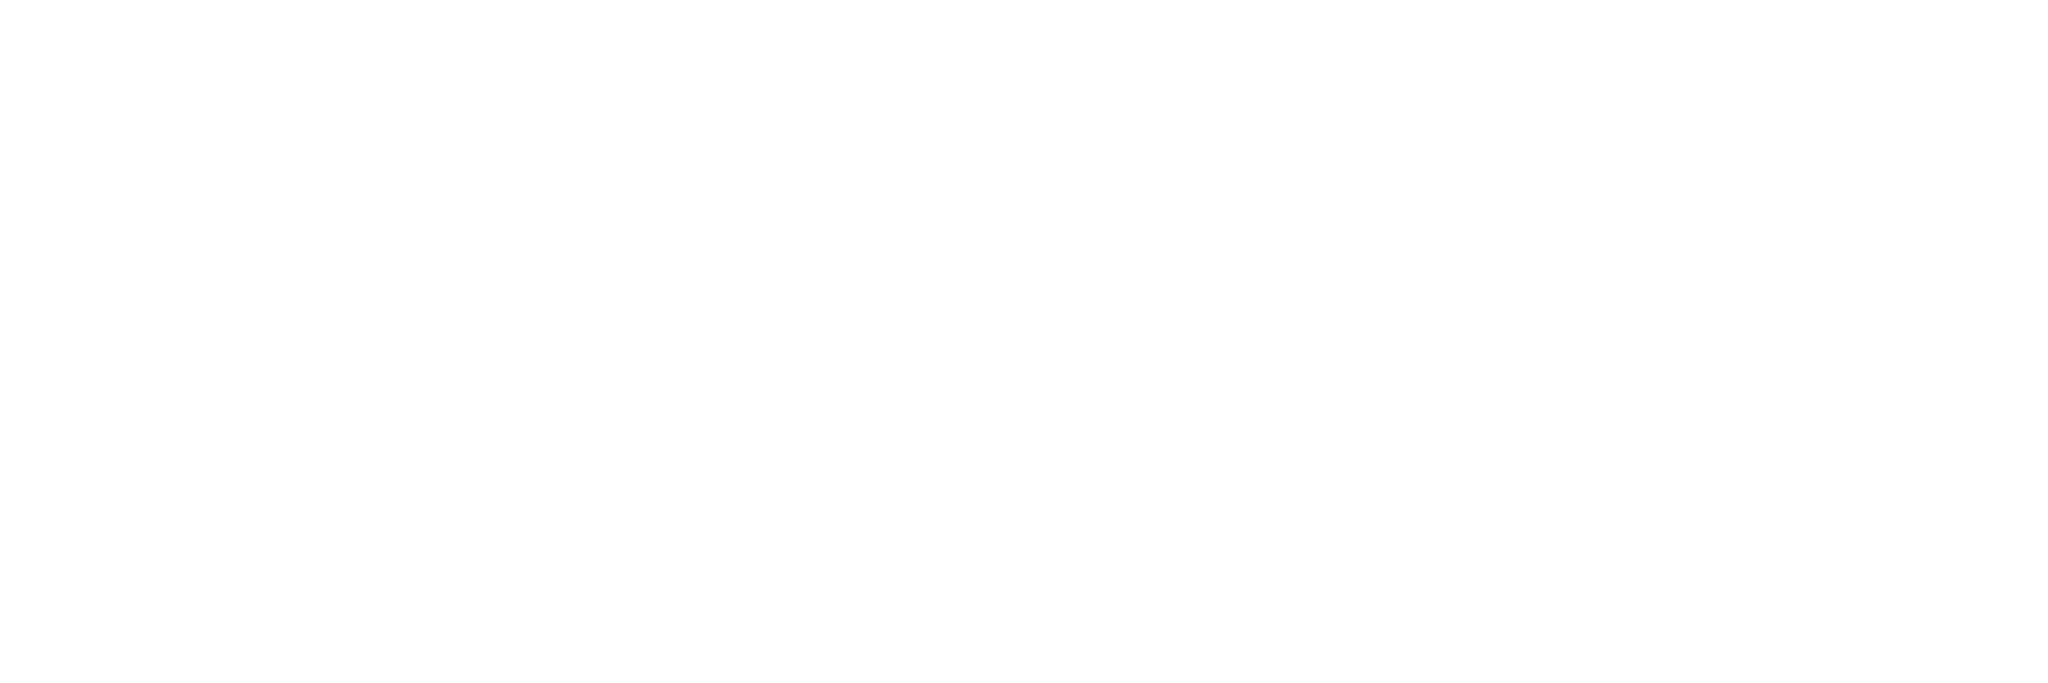 Project Cars 3 é anunciado pela Bandai Namco